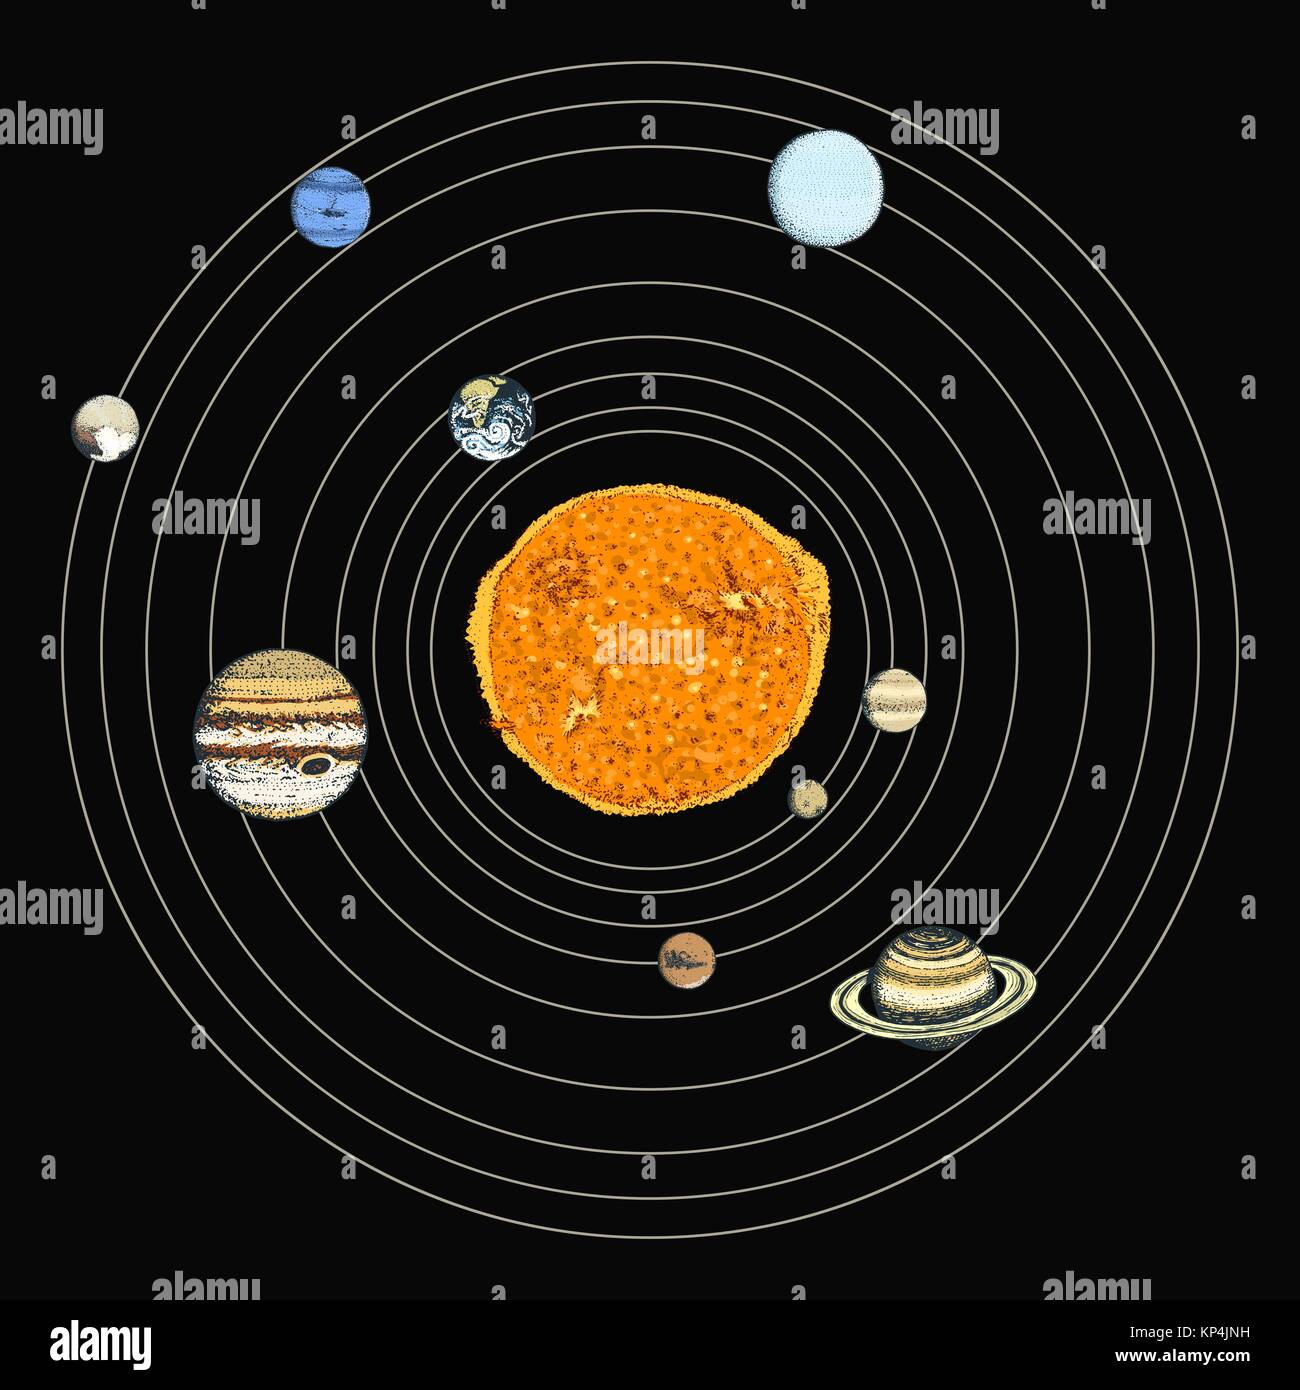 solar system diagram to label